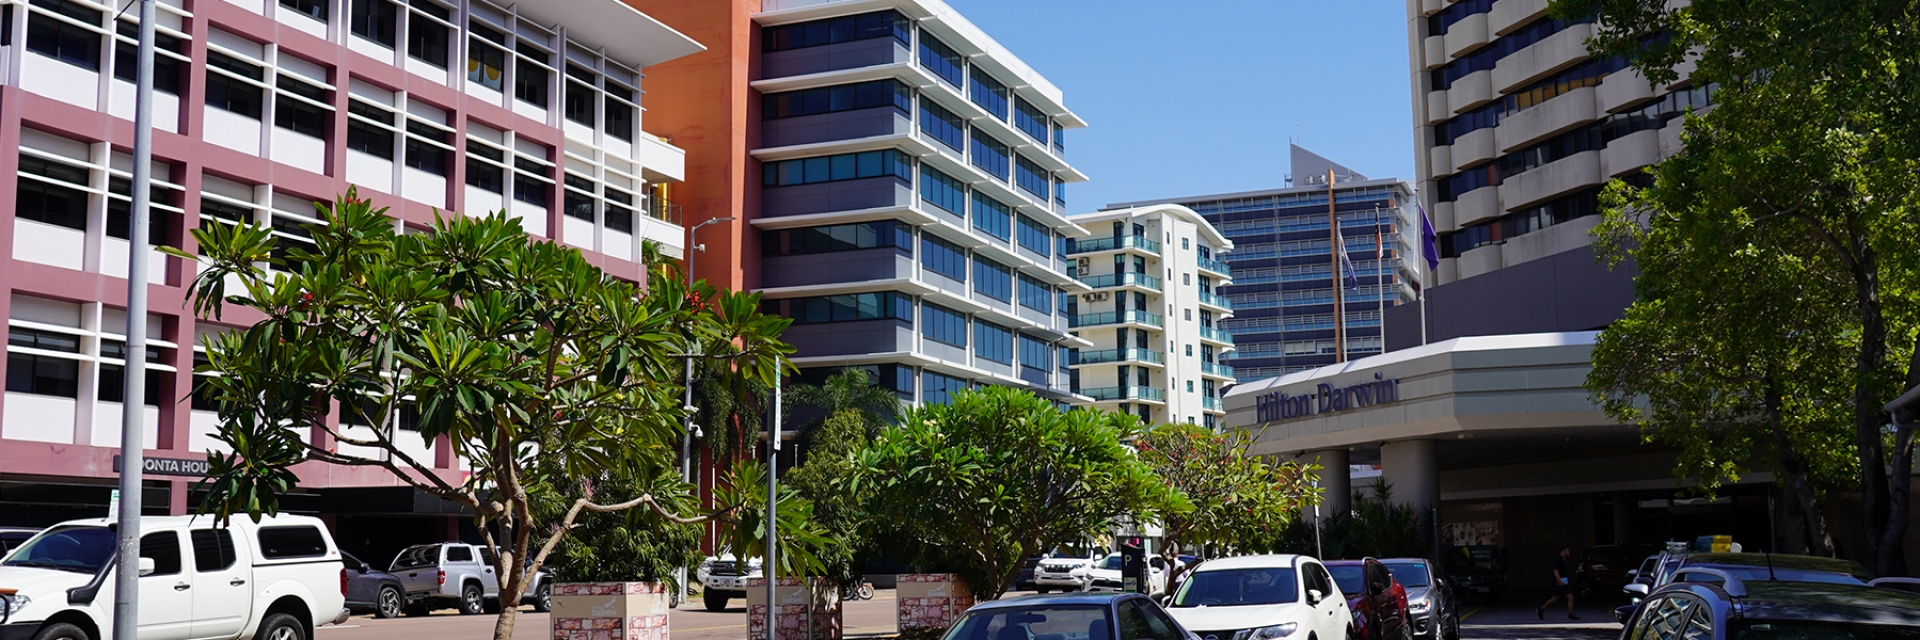 Street view of buildings in Darwin CBD